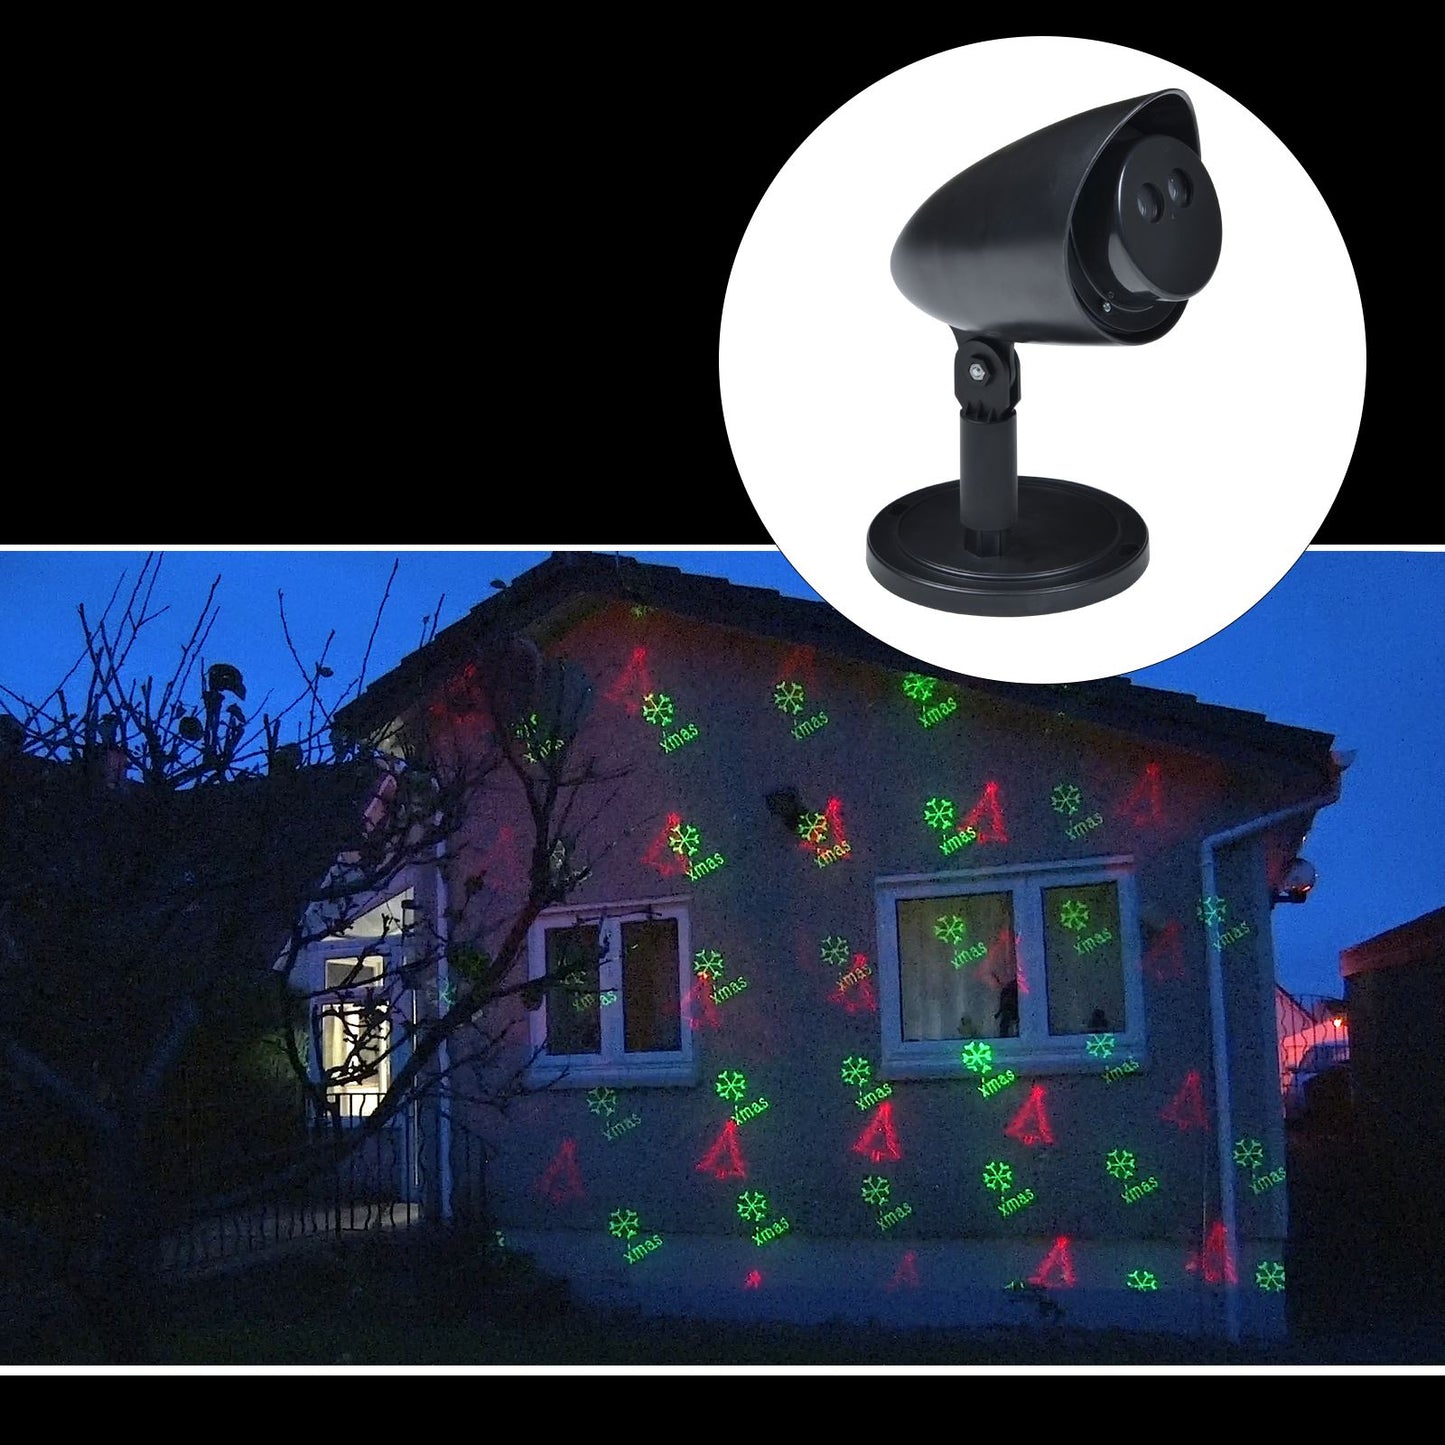 Mr Crimbo Garden Laser Light Projector With 8 Christmas Patterns - MrCrimbo.co.uk -XS5173 - -christmas house lights